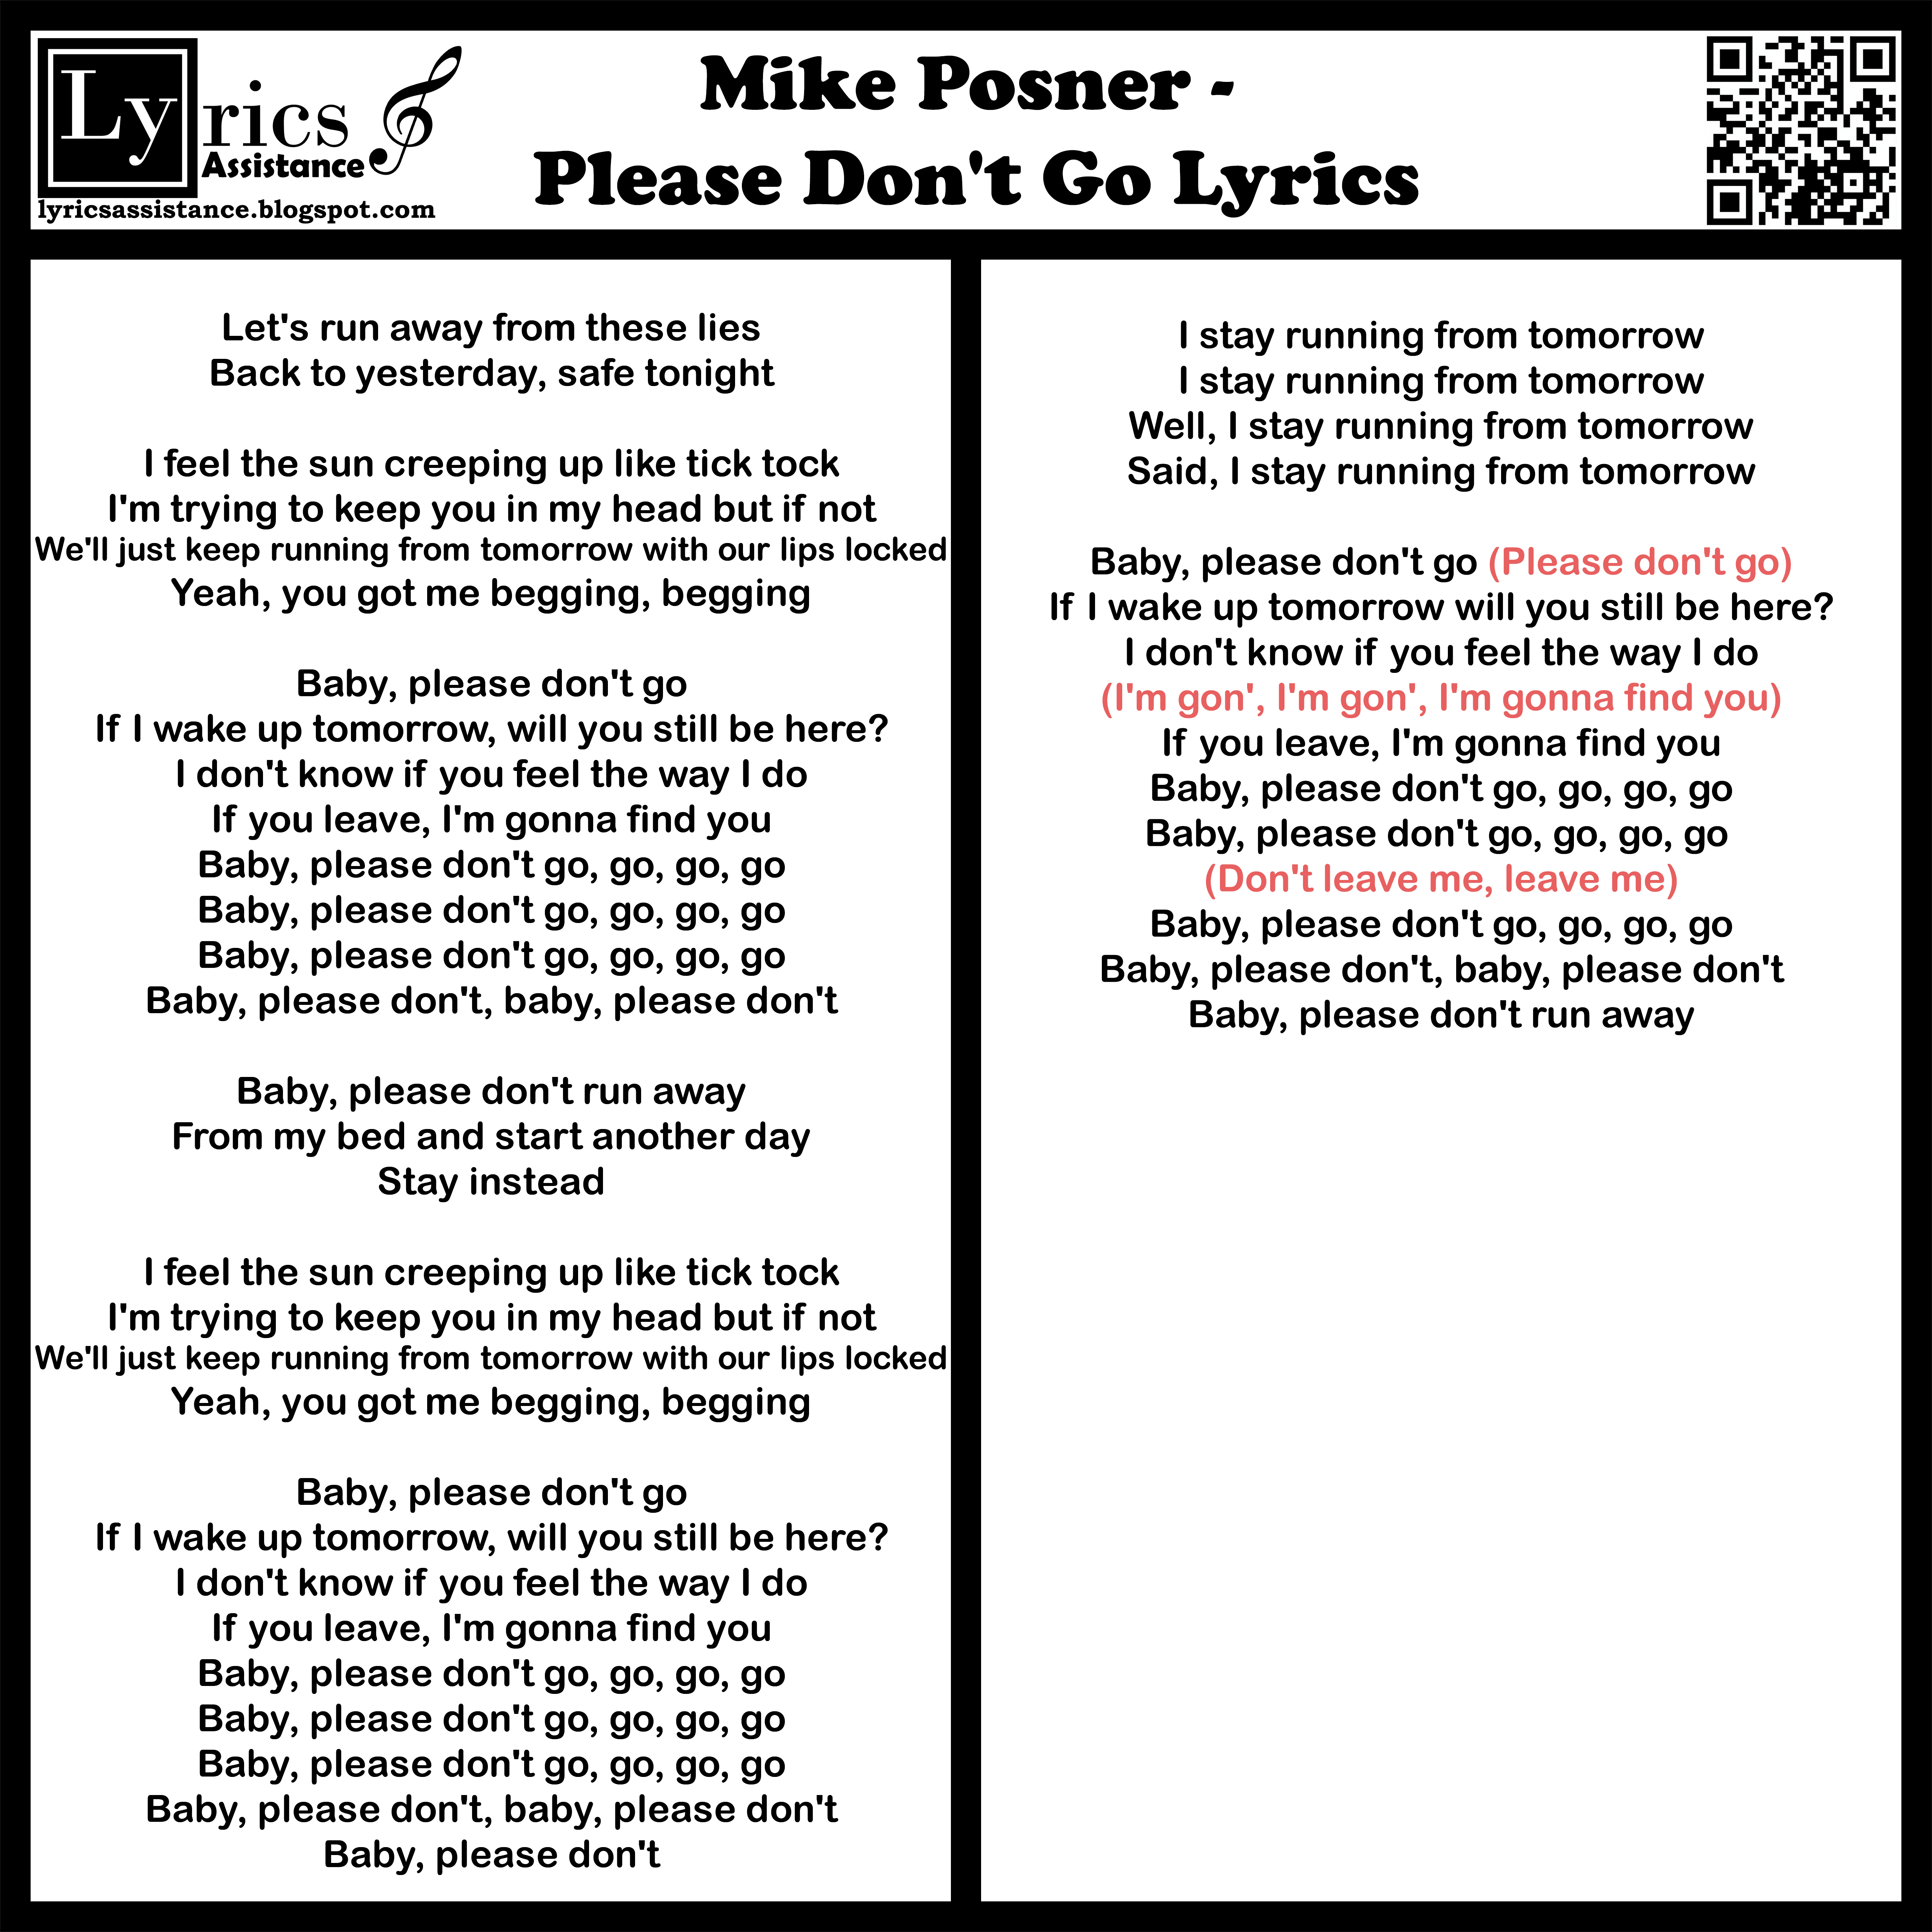 mike posner - please don't go lyrics